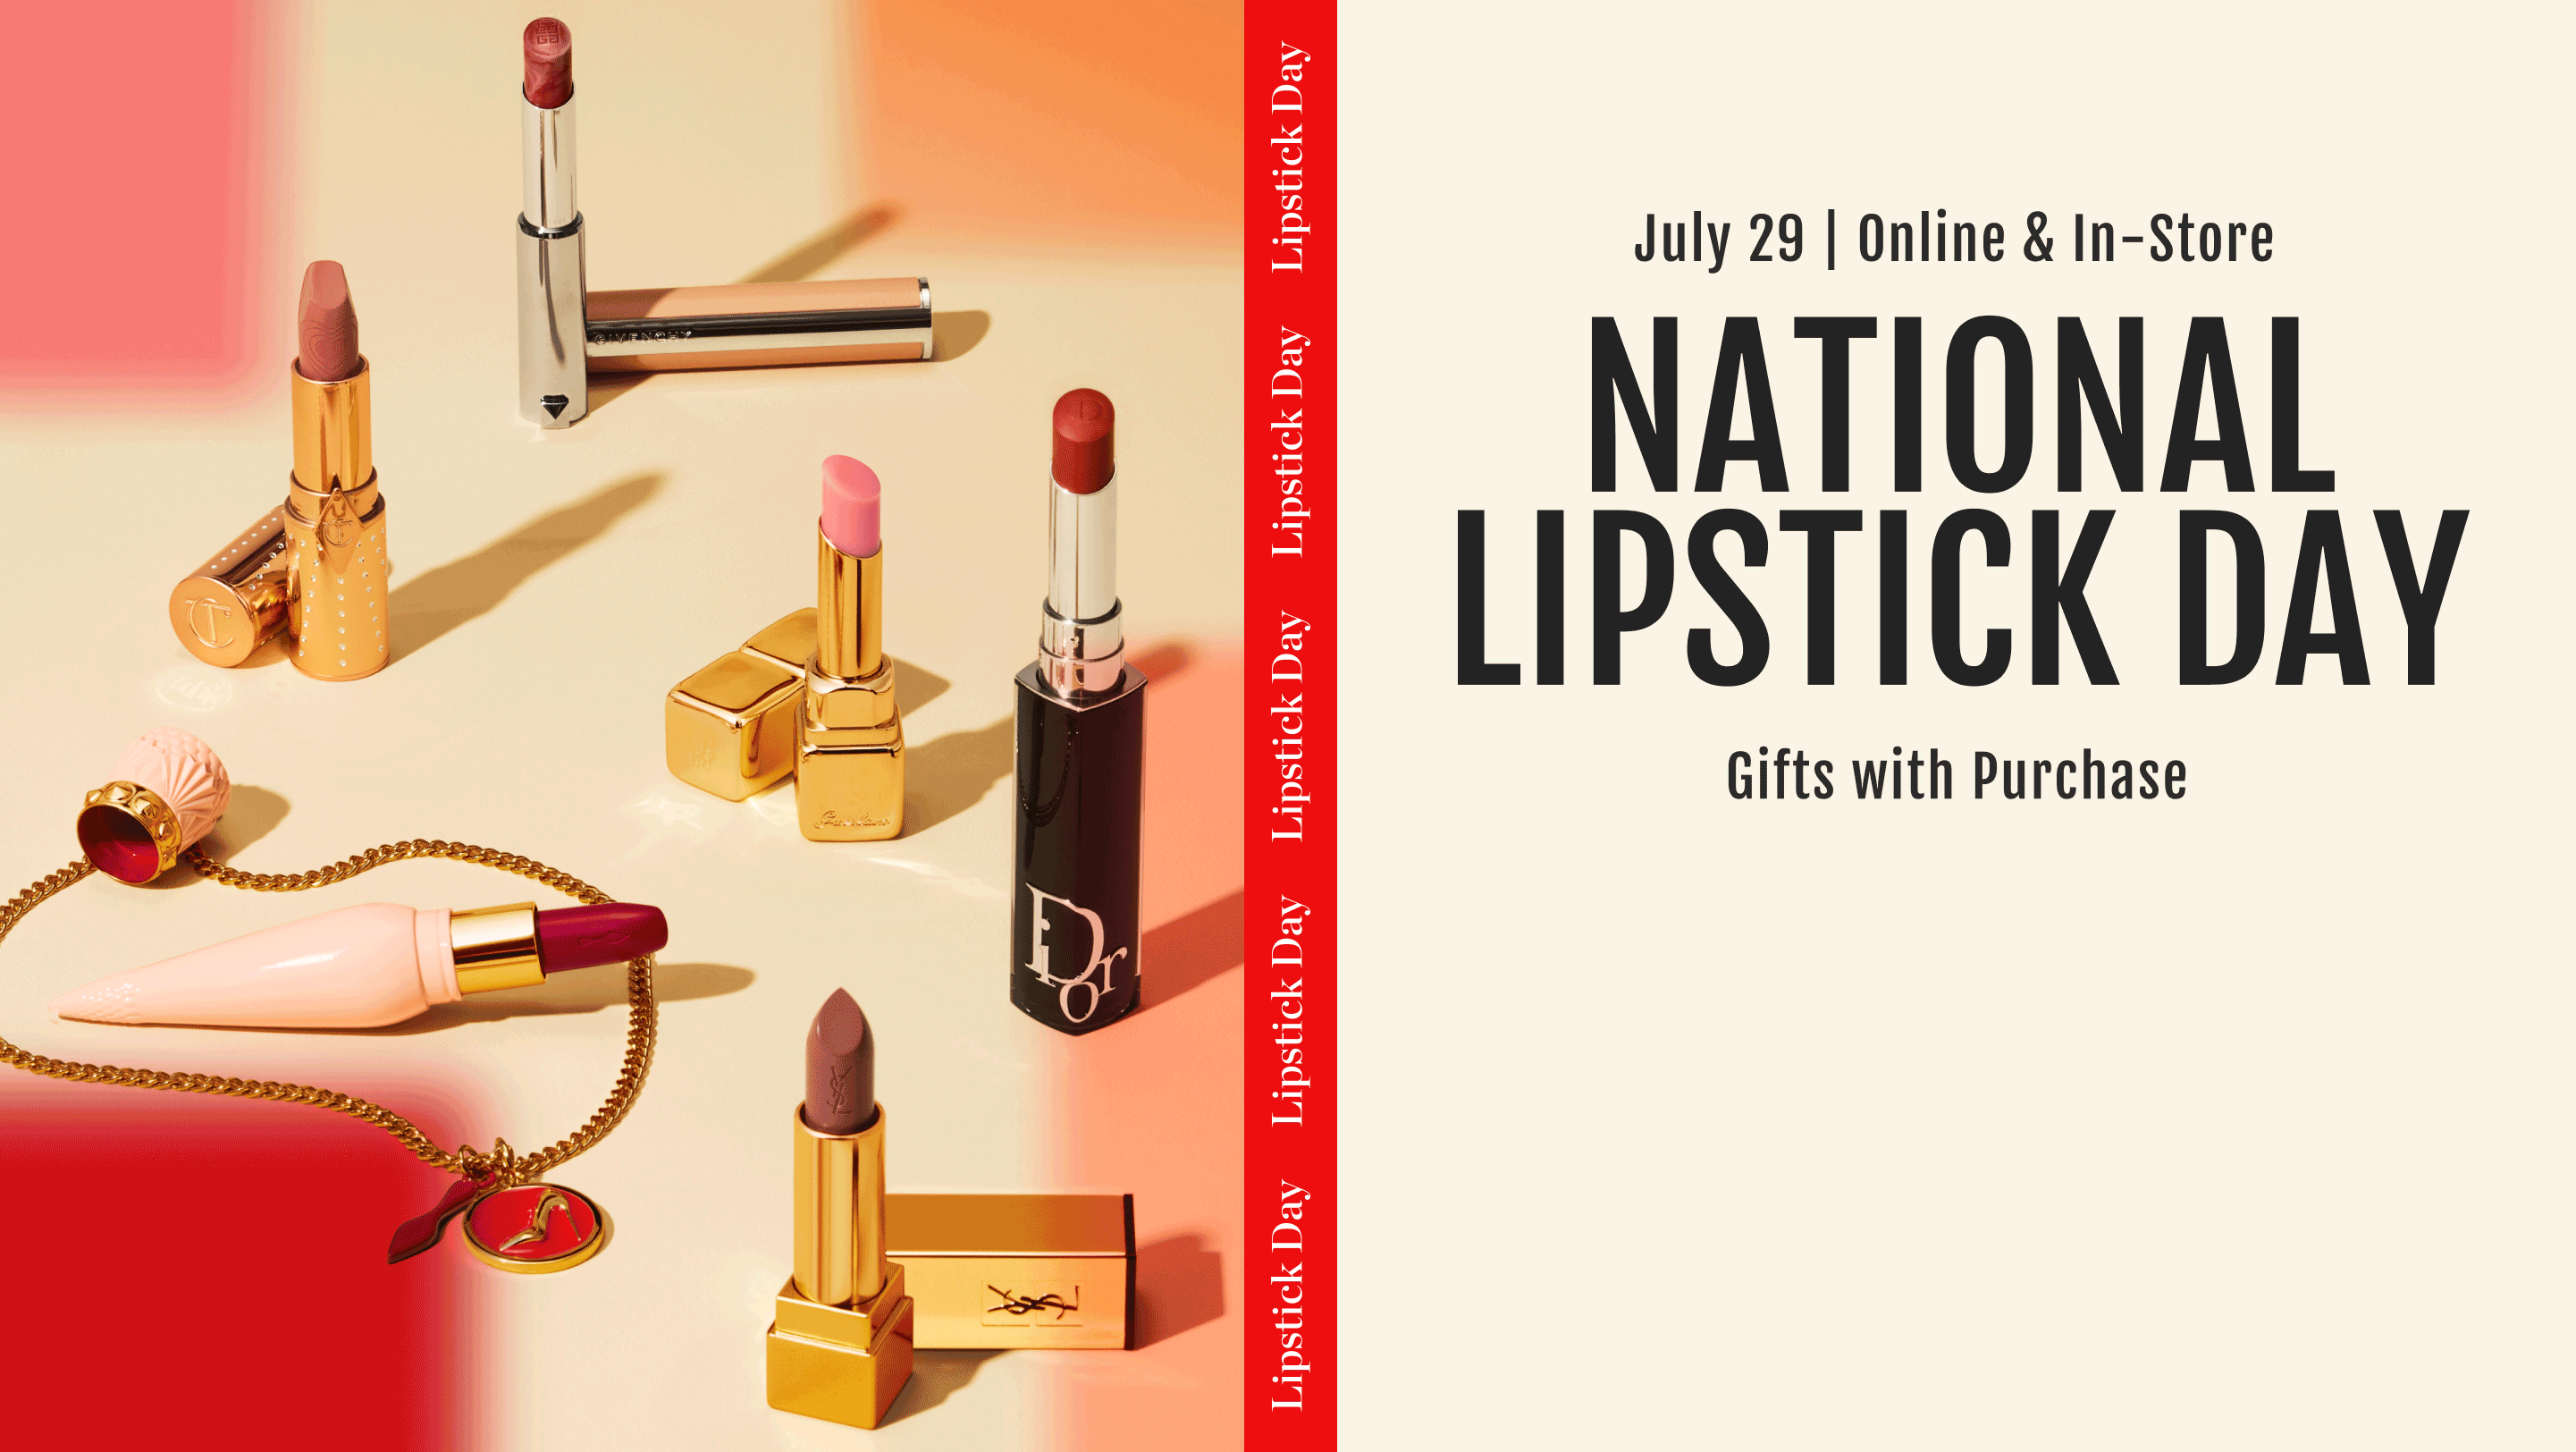 National Lipstick Day Offers Holt Renfrew